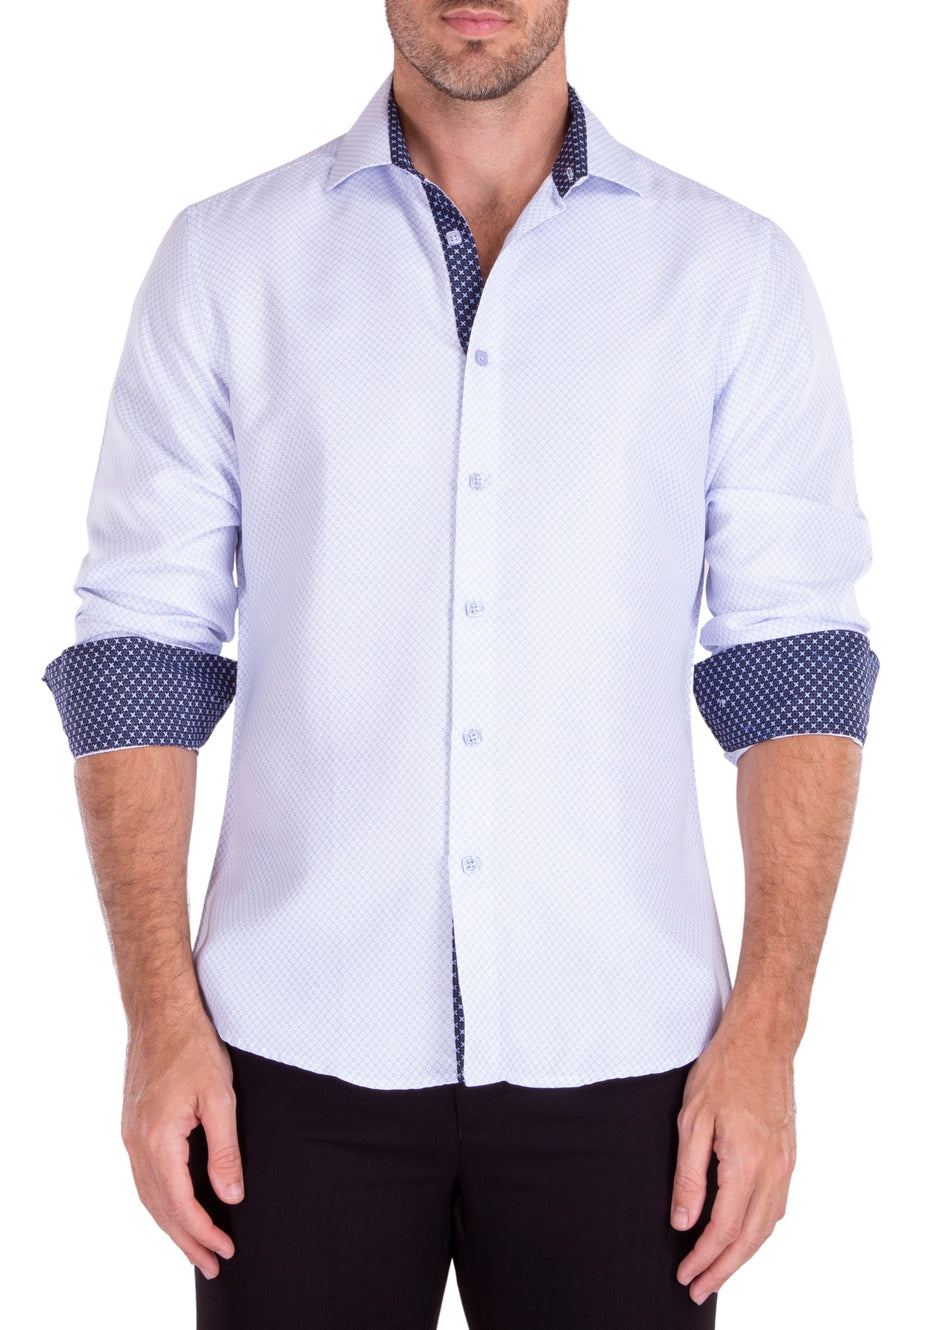 212385 - White Long Sleeve Shirt